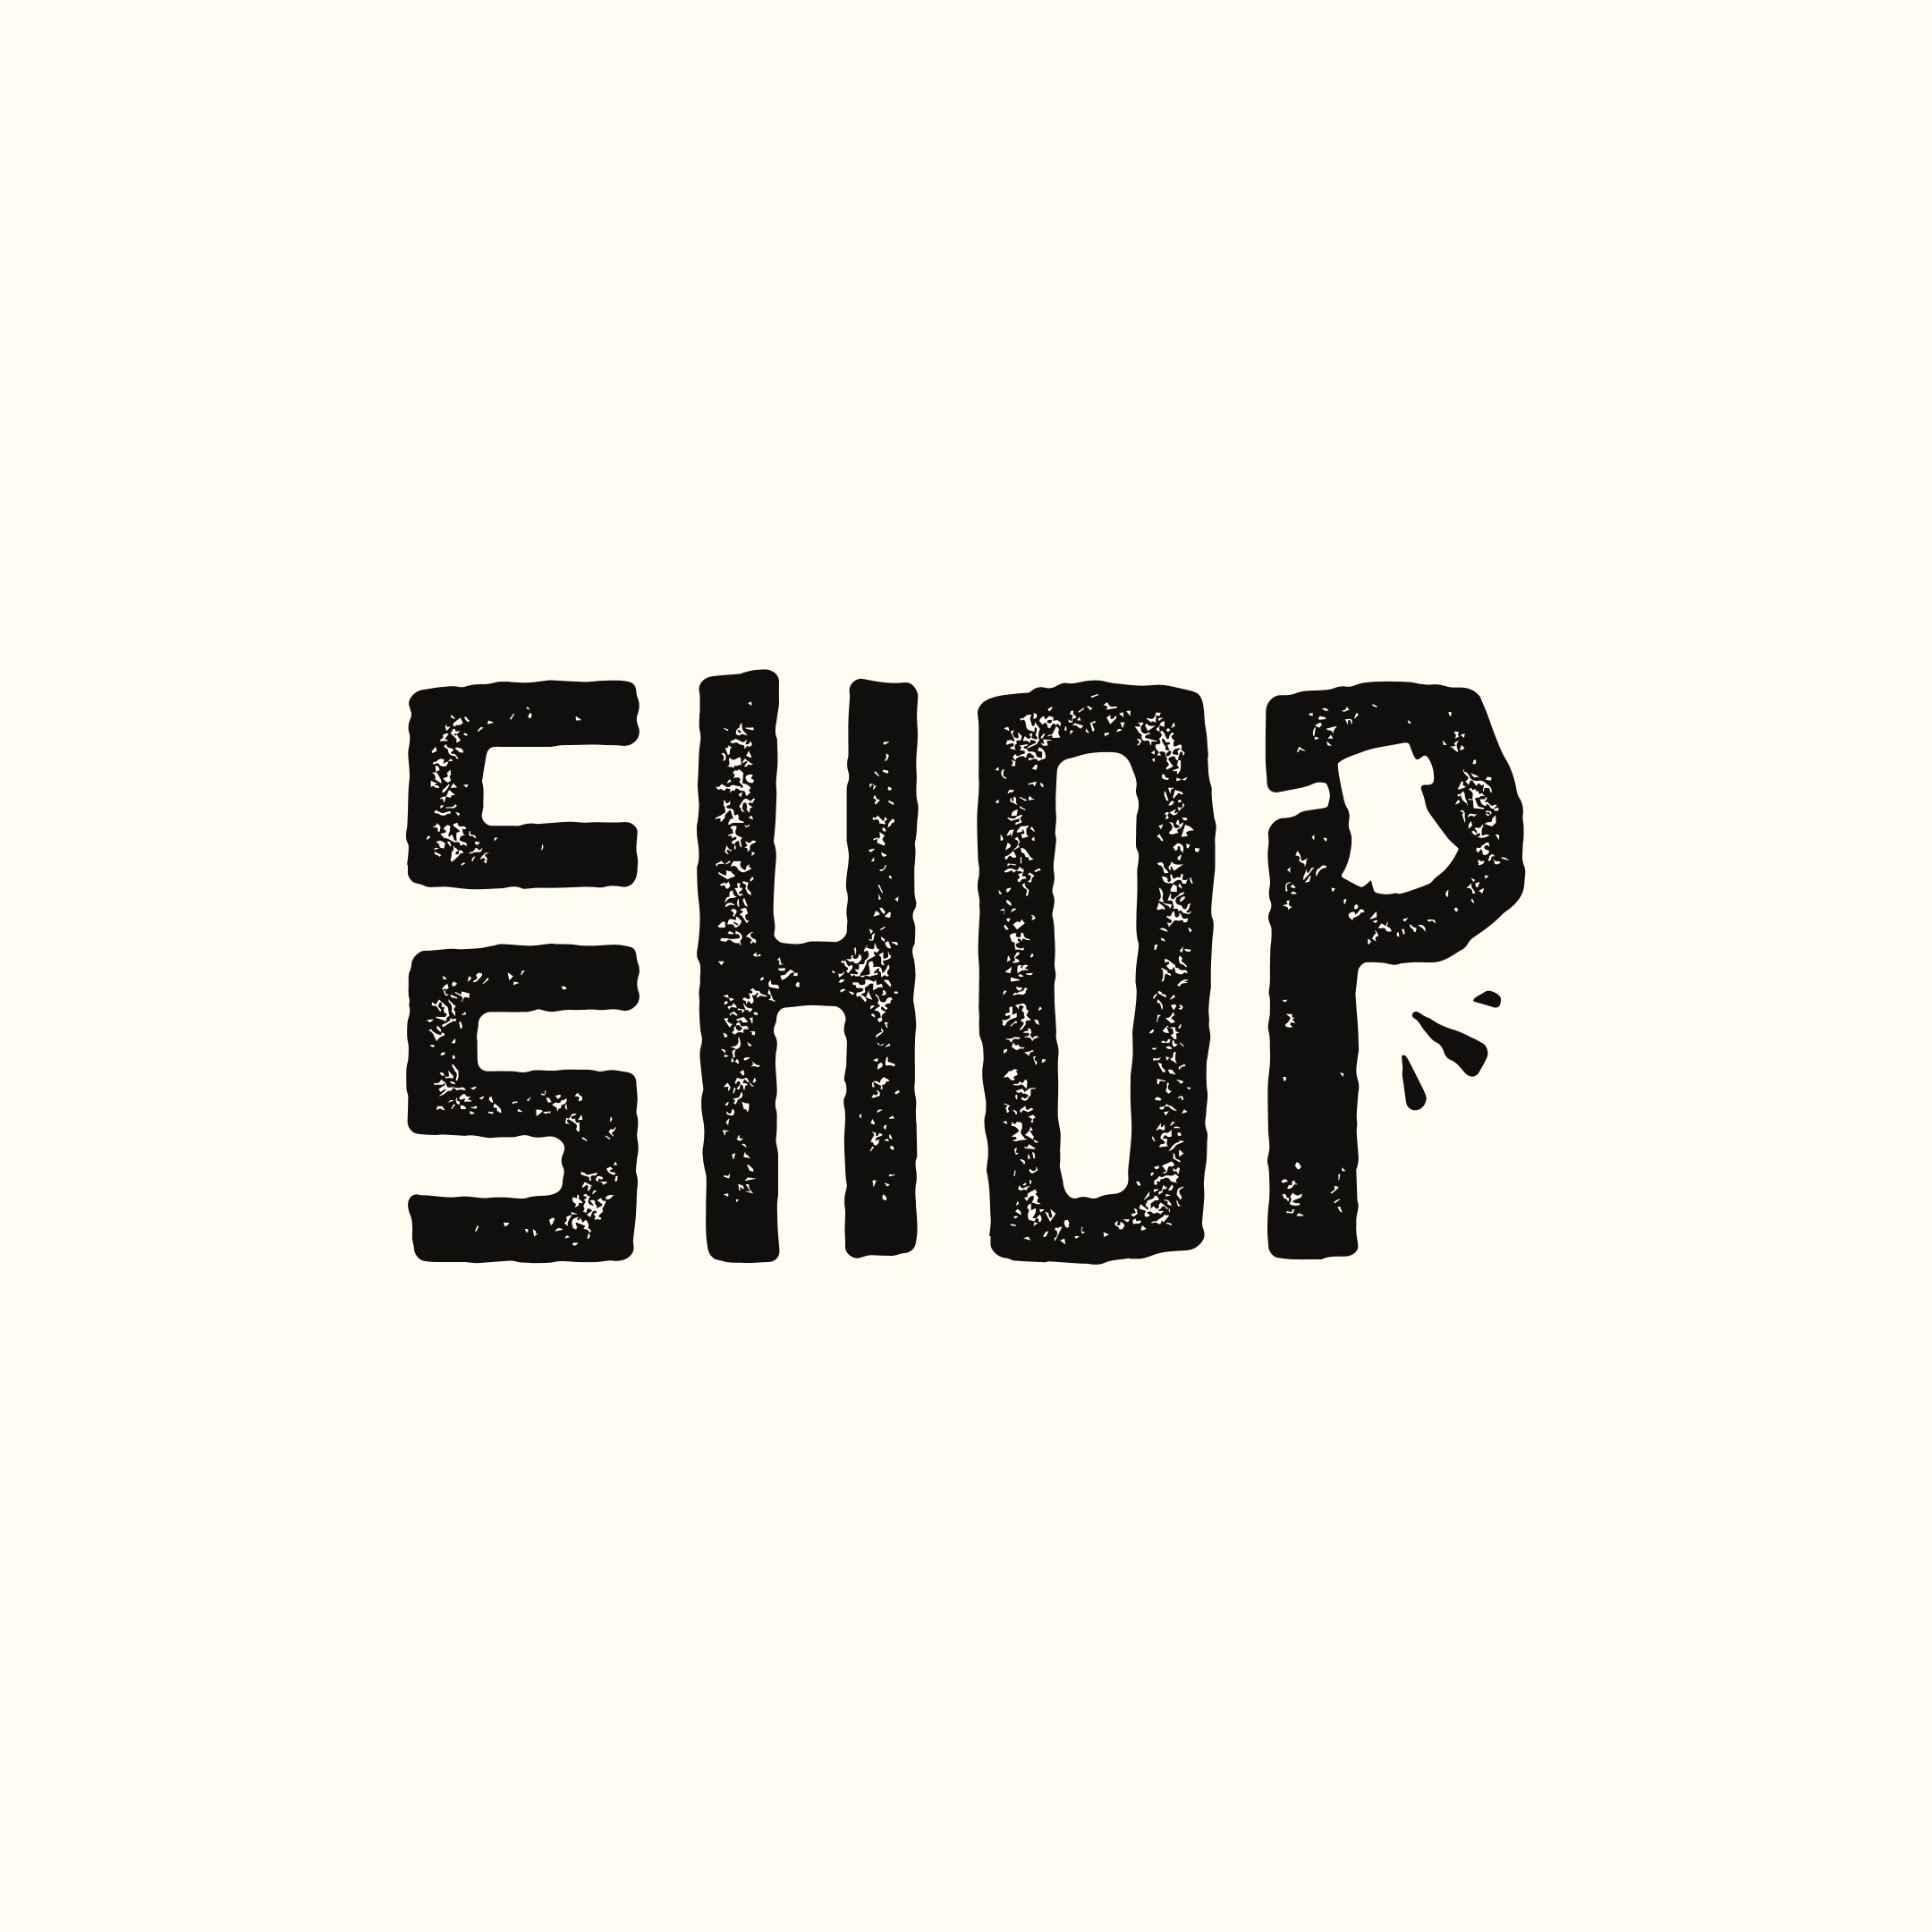 Chop-Shop